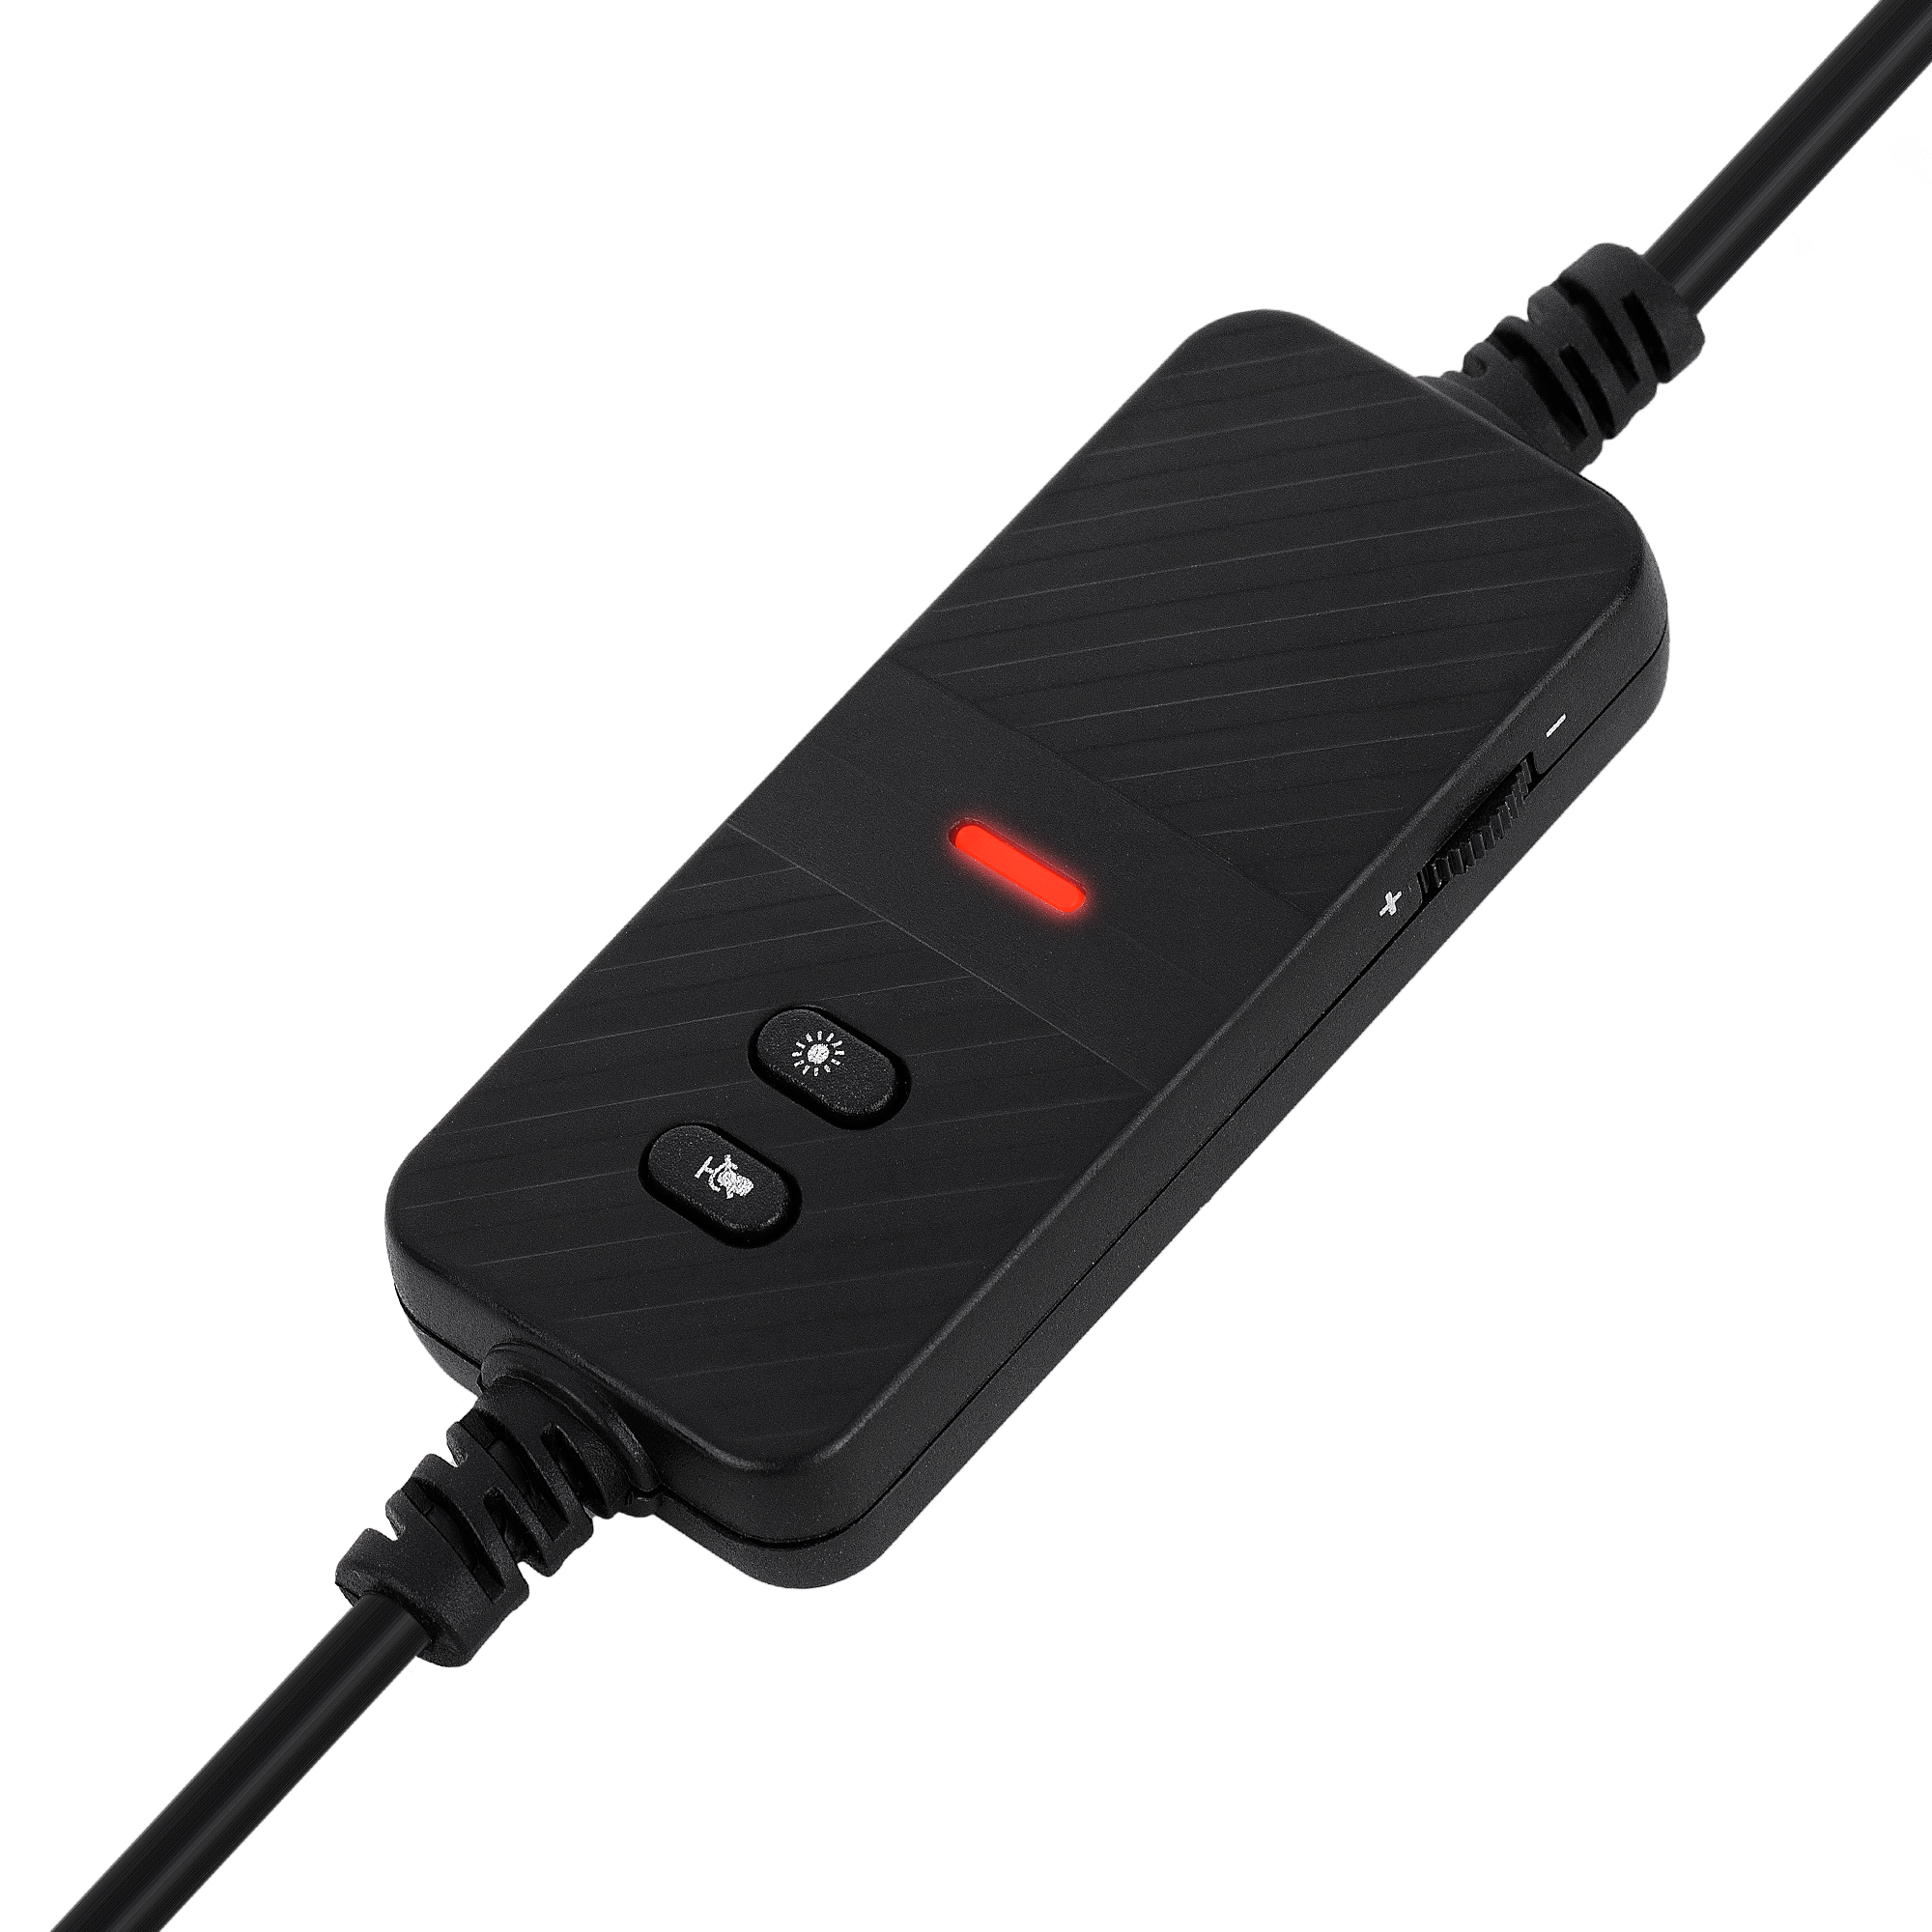 MARVO 7.1 USB Wired Gaming Headset (HG9068)